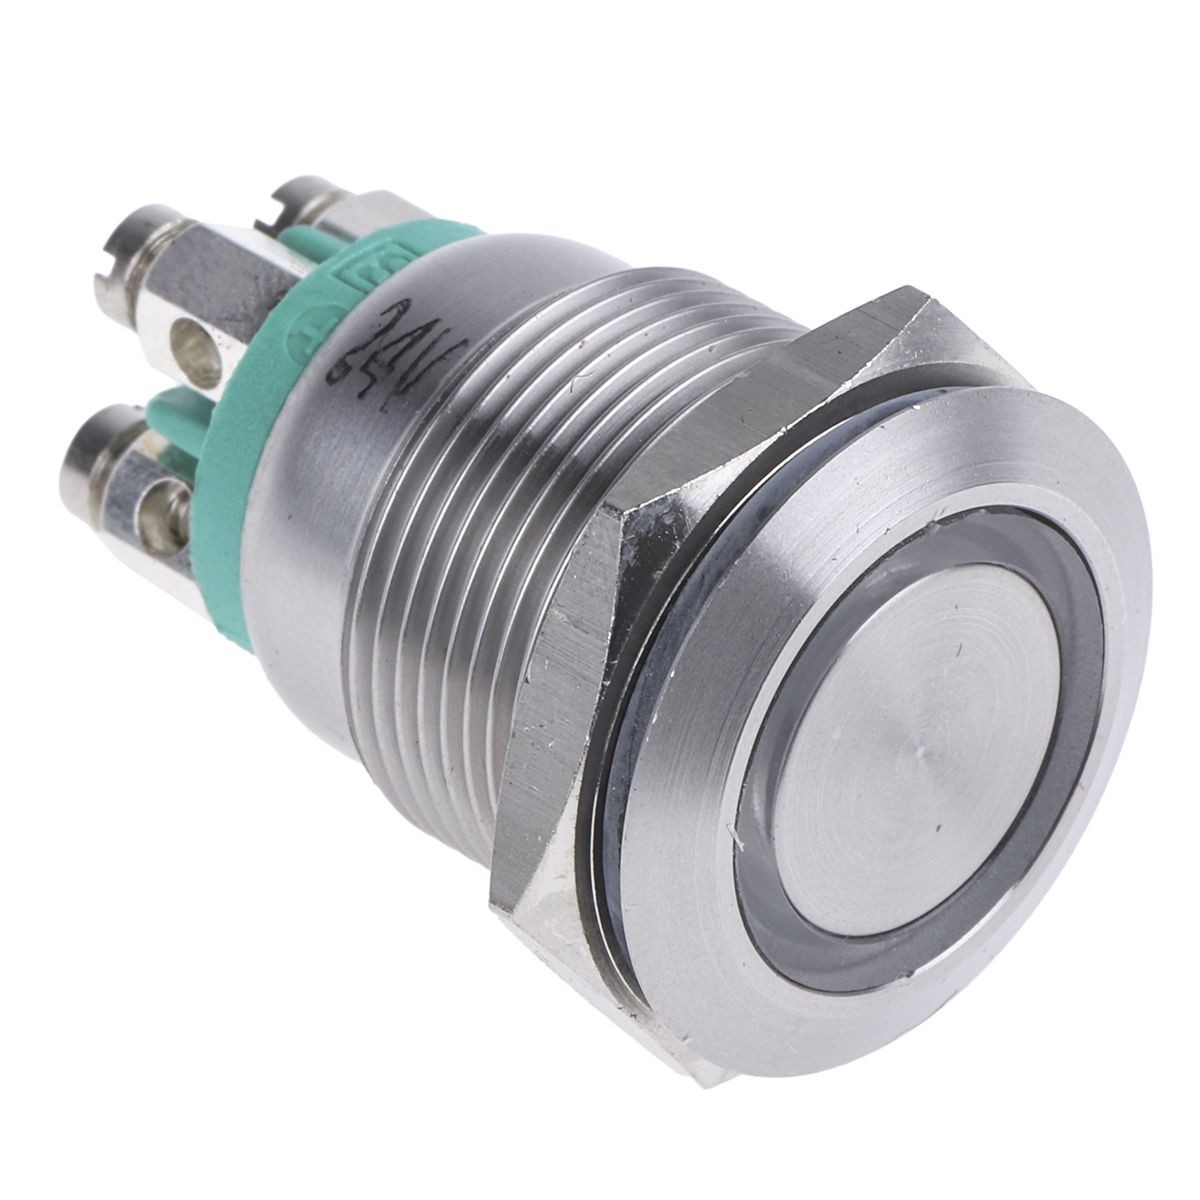 Bulgin Illuminated Momentary Push Button Switch, Panel Mount, SPST, 19.2mm Cutout, Green LED, 24V dc, IP66